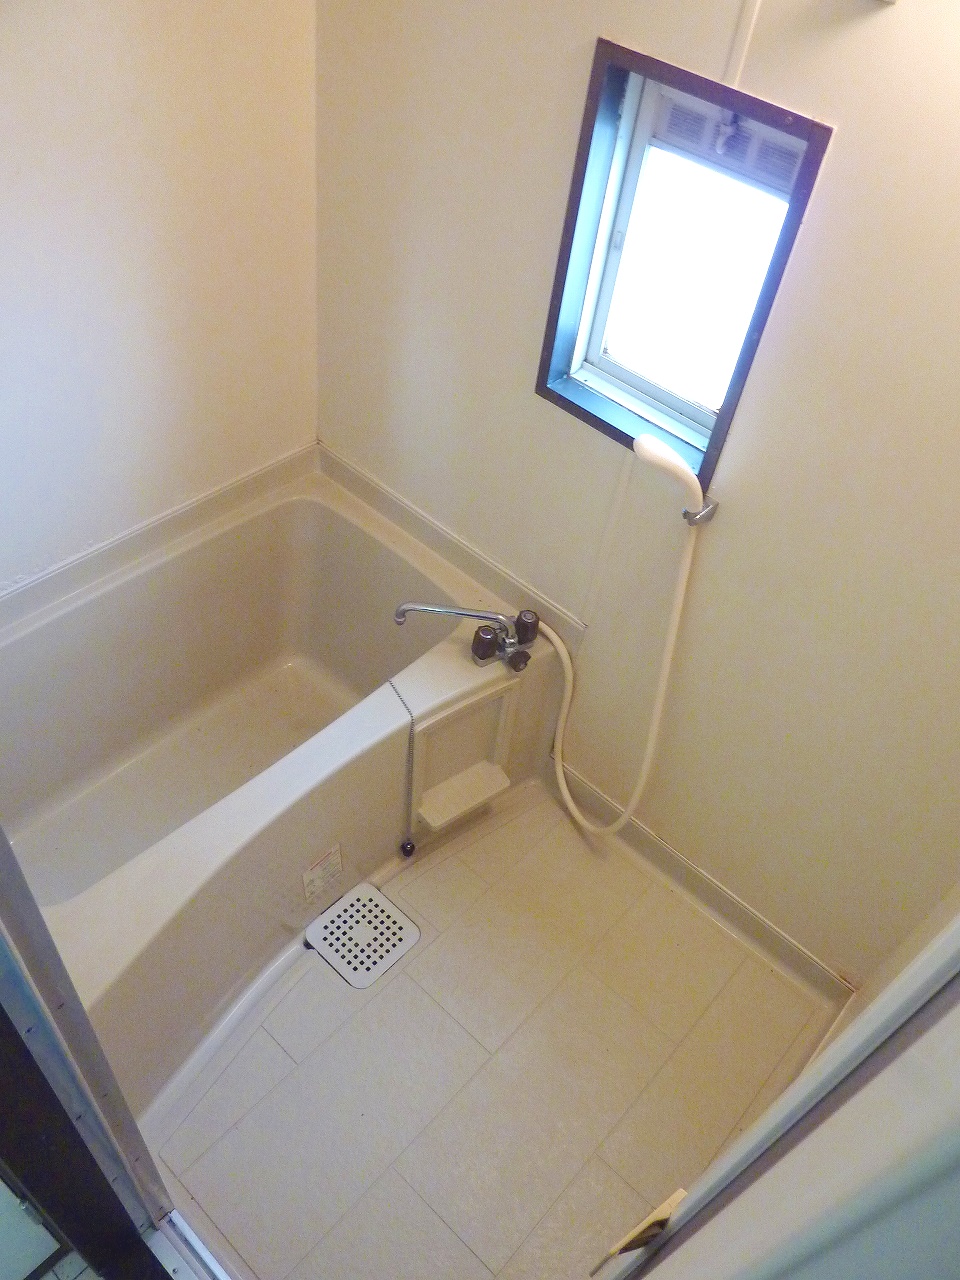 Bath. It is a bathroom with a small window ☆ Economic city gas ☆ 